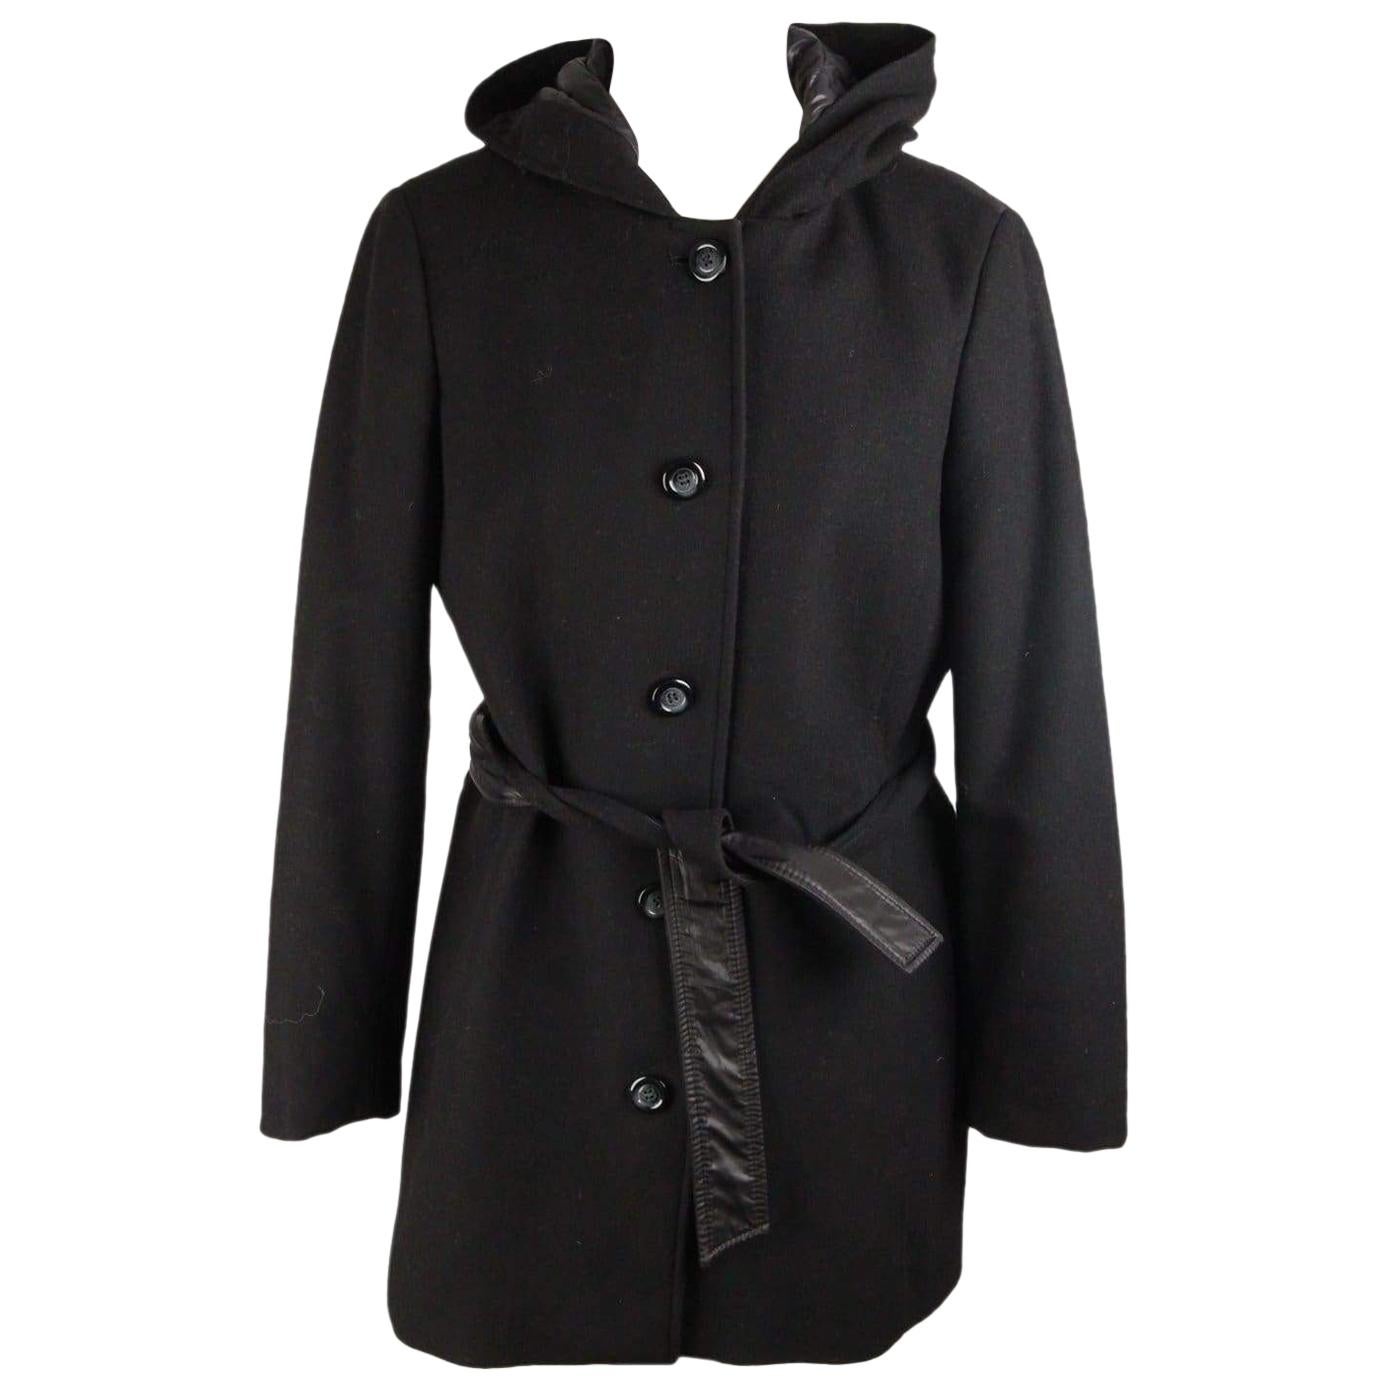 GEOX Black Wool Blend MID LENGHT JACKET Coat HOODED Size 44